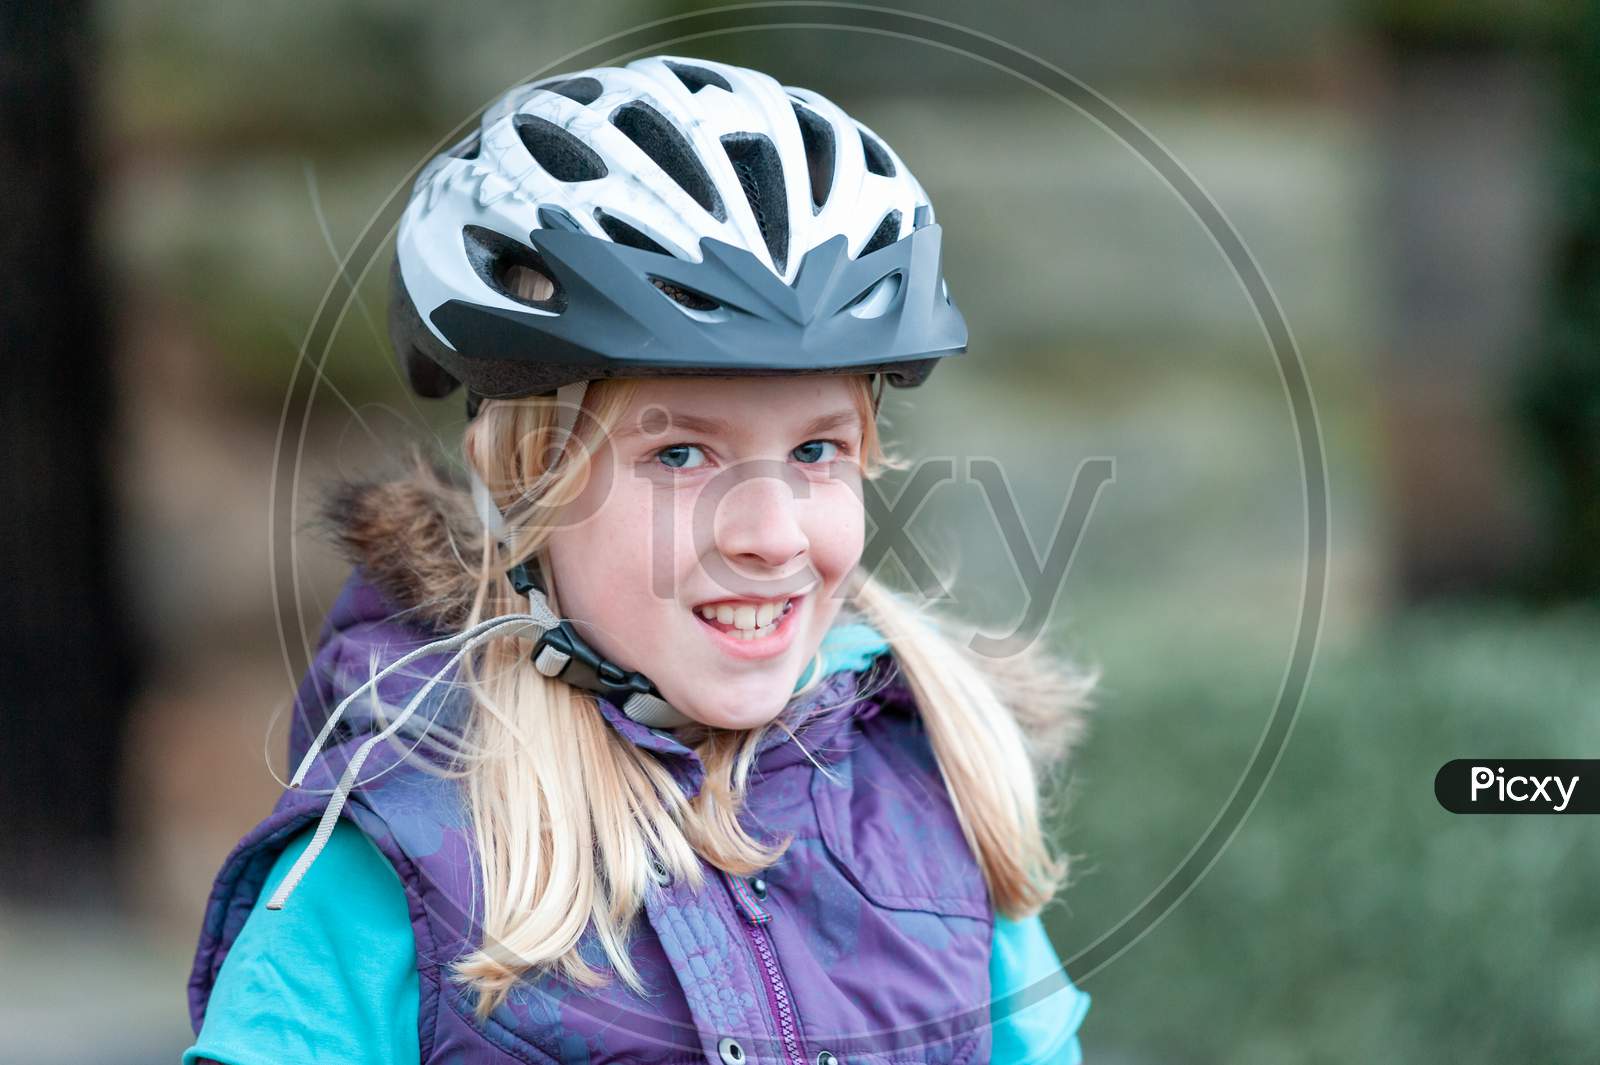 A Happy Young Blonde Girl Wears A Bike Helmet